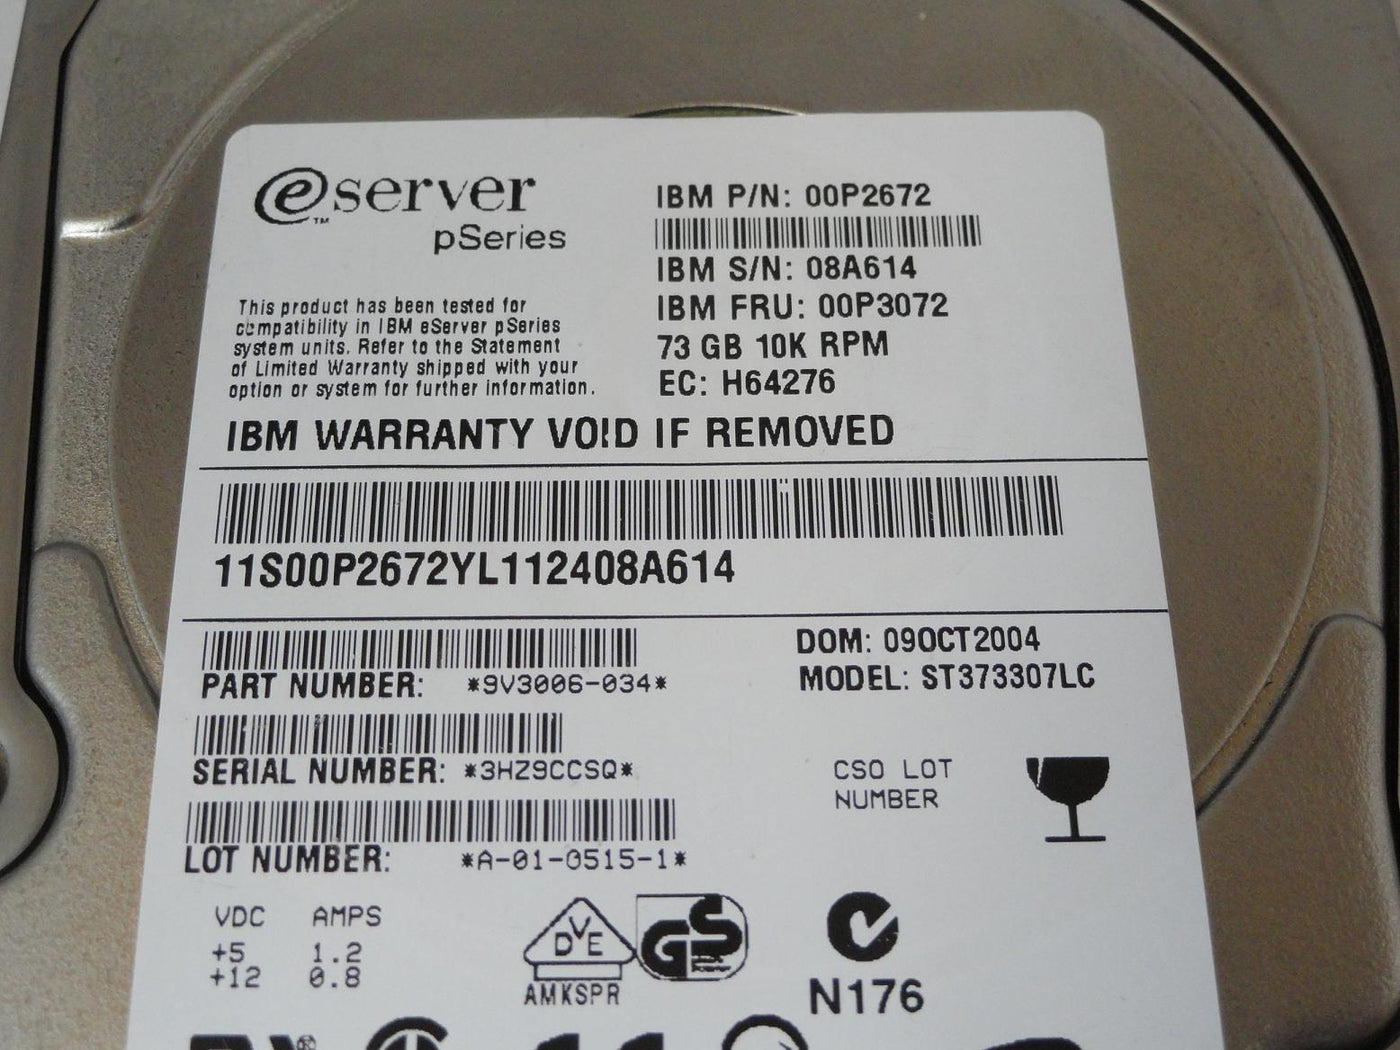 PR23942_9V3006-034_Seagate IBM 73GB SCSI 80 Pin 10000rpm 3.5in HDD - Image3